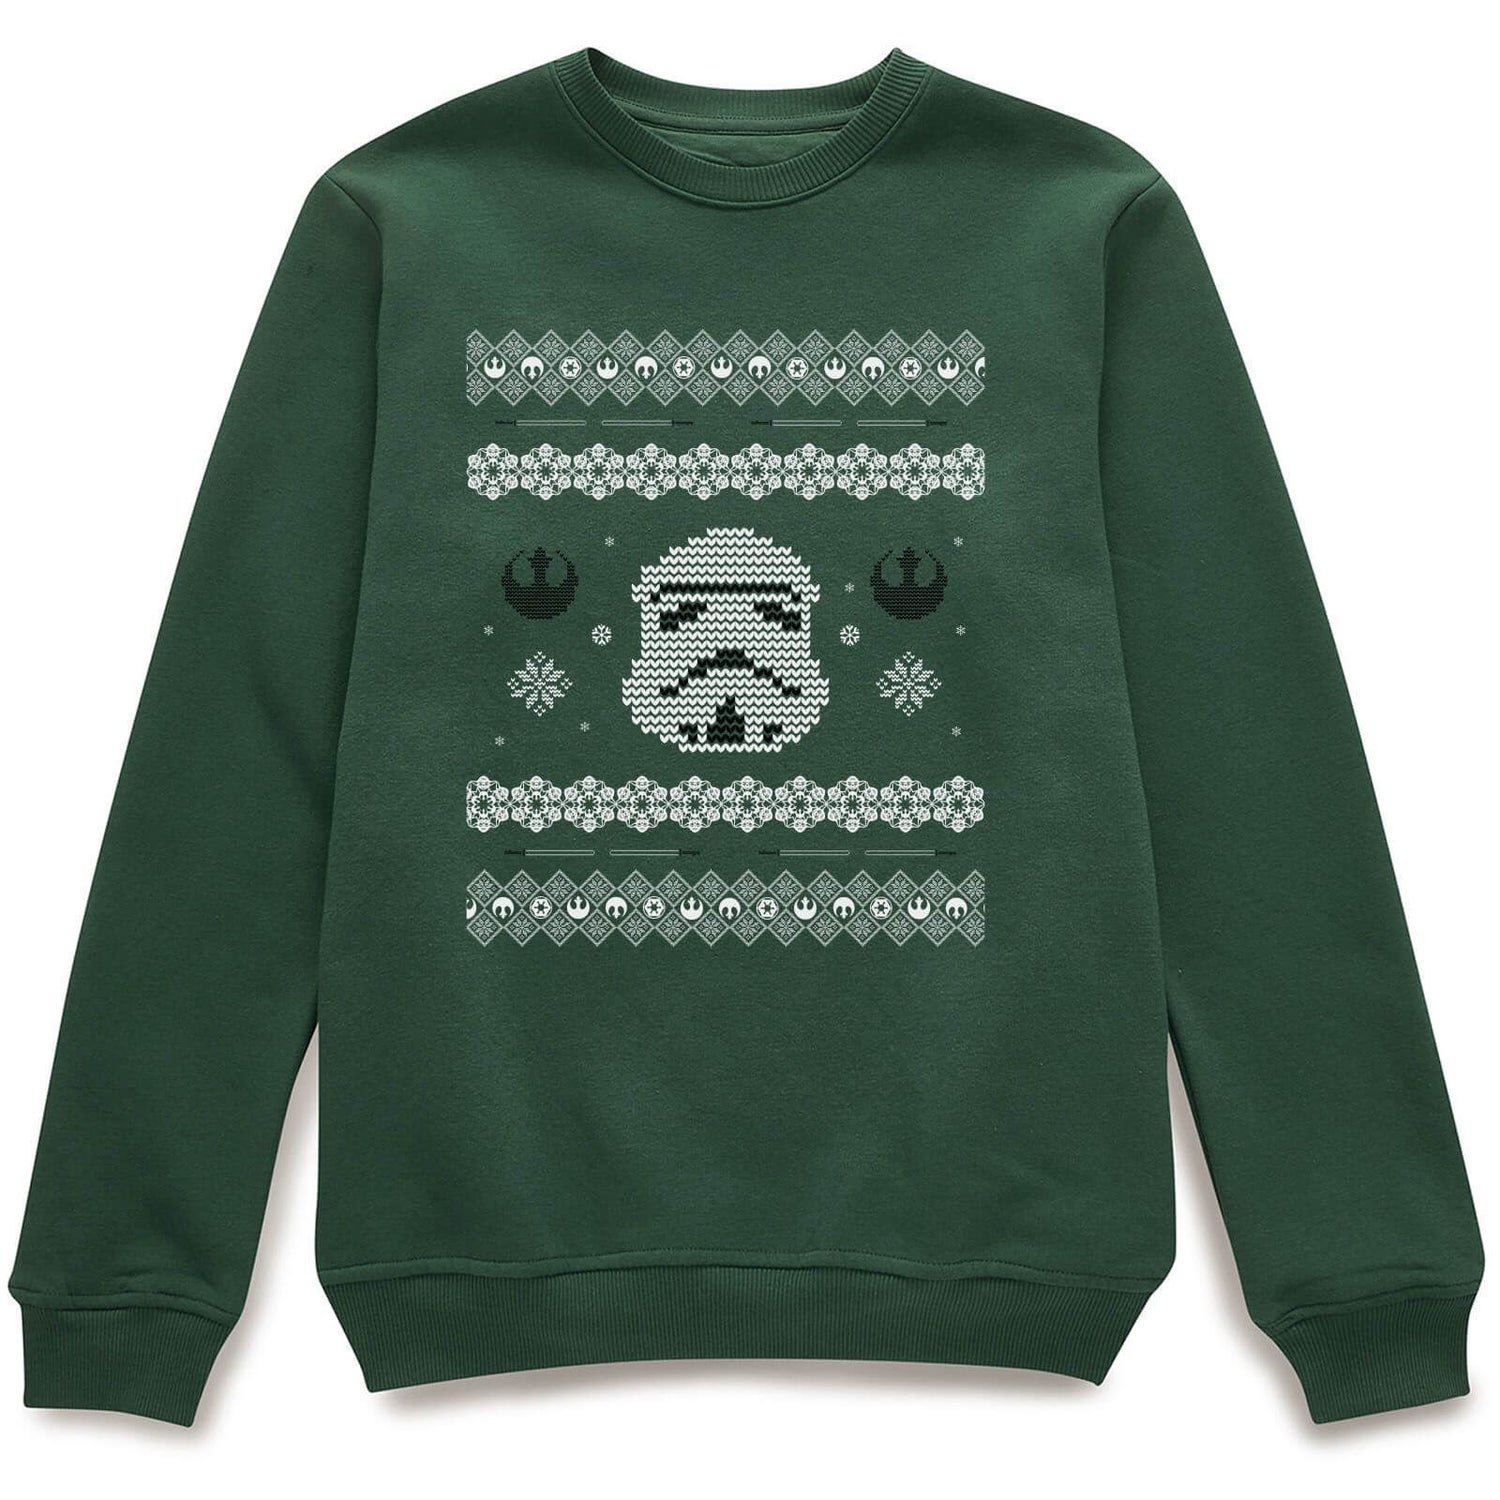 Star Wars Christmas Stormtrooper Knit Green Christmas Jumper